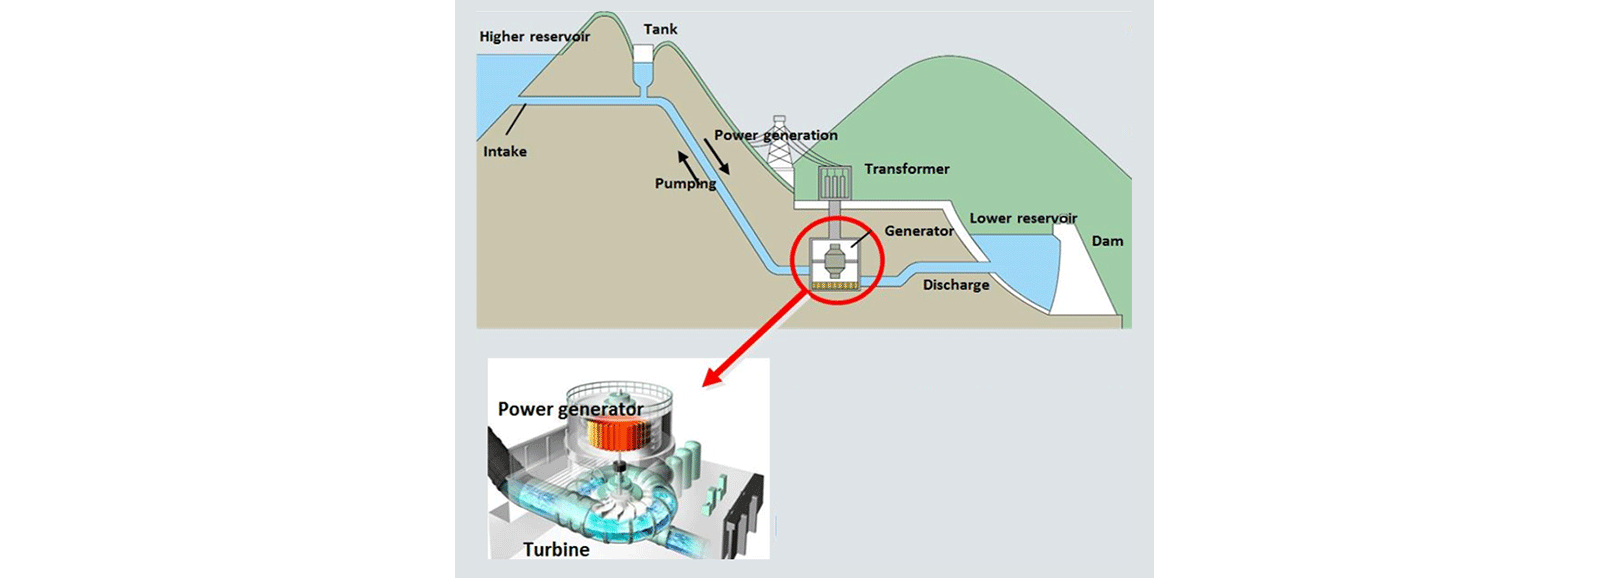 Hydroelectric power: pumped-storage power generation